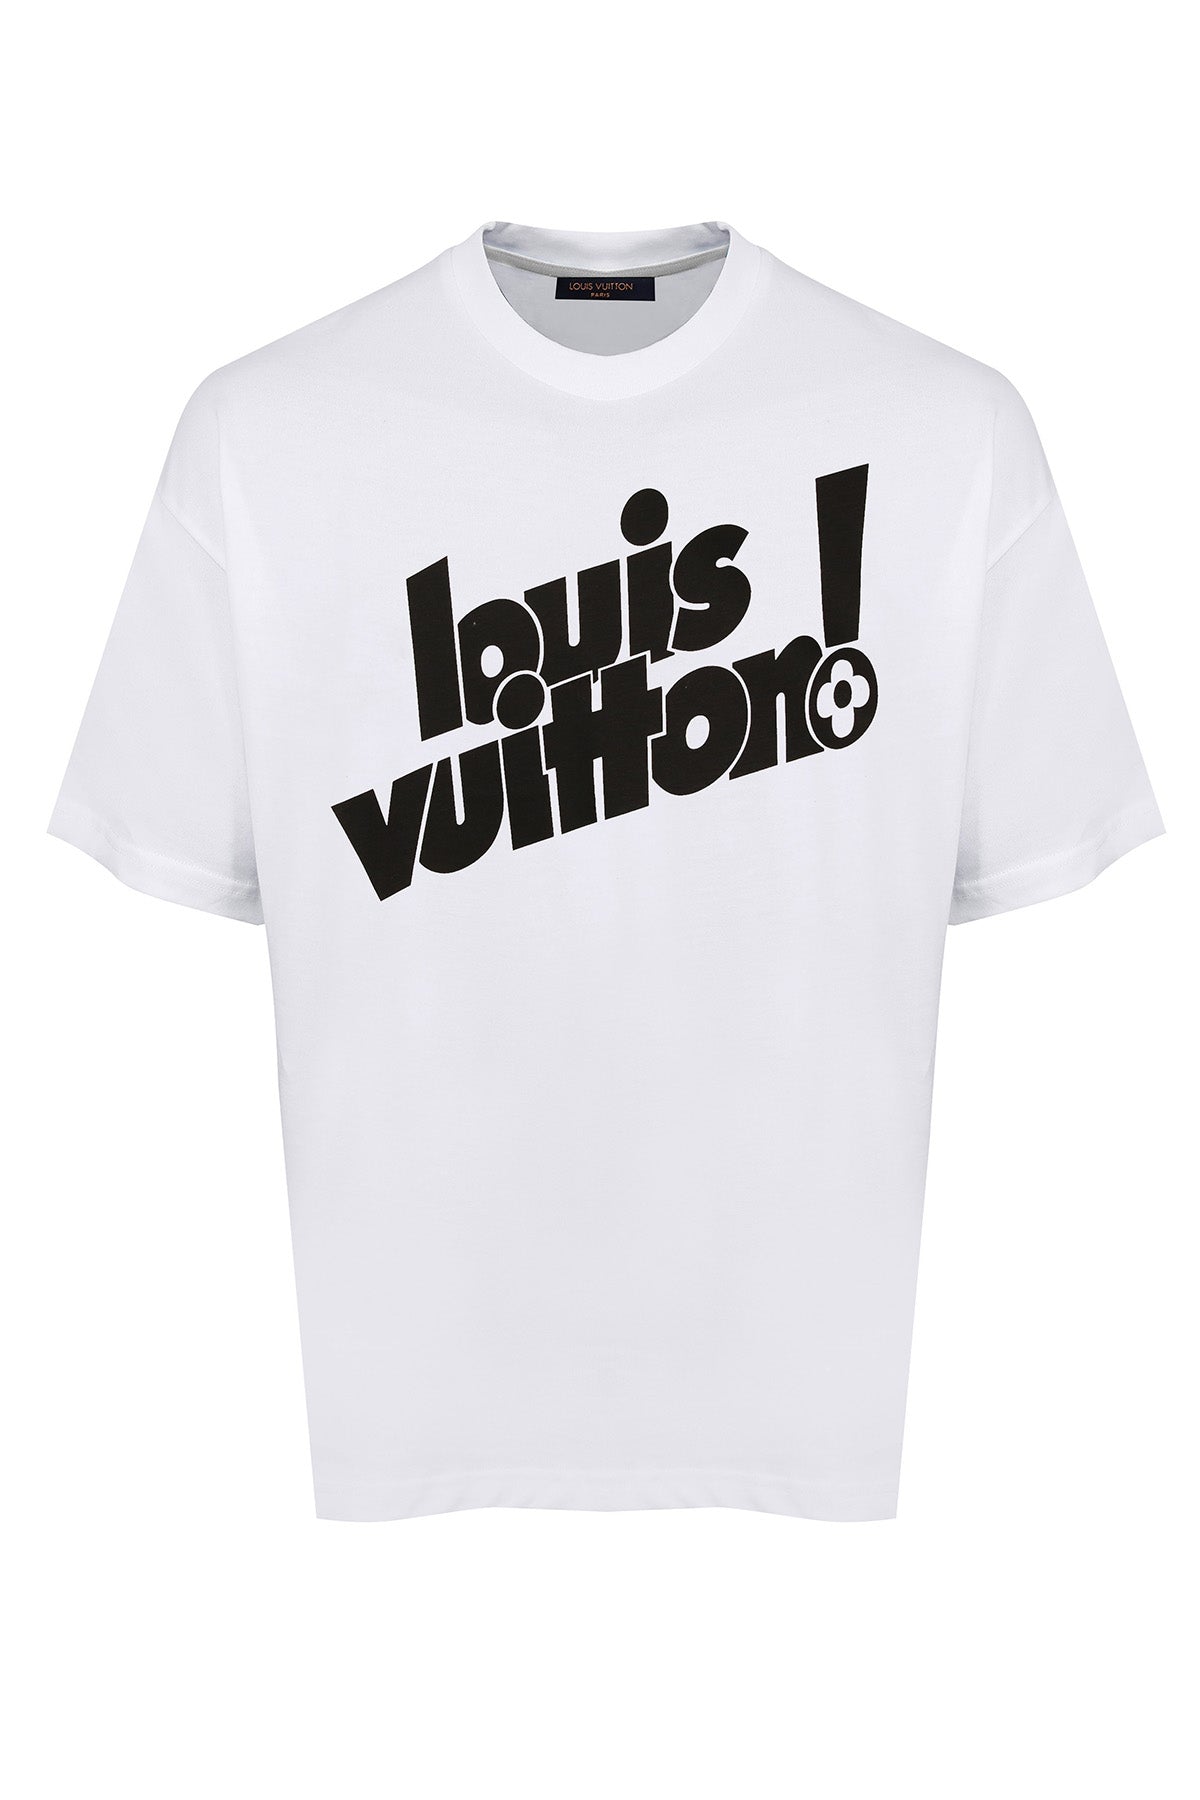 Louis Vuitton, Shirts, Luis Vuitton Black And White Tee Size Medium  Authentic